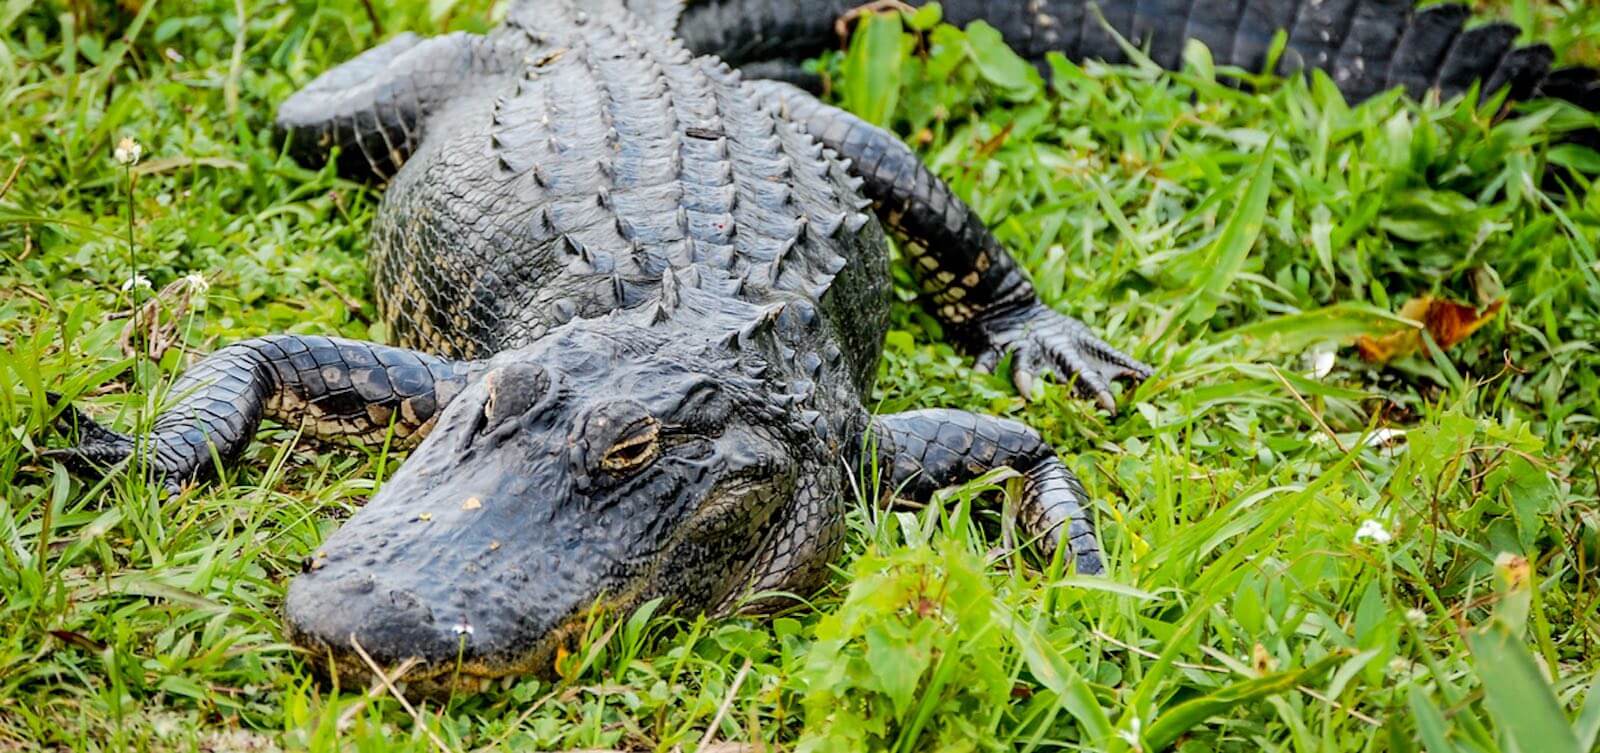 MustDo.com | American Alligator at Shark Valley, Everglades, Florida, USA. Photo by Debi Pittman Wilkey.